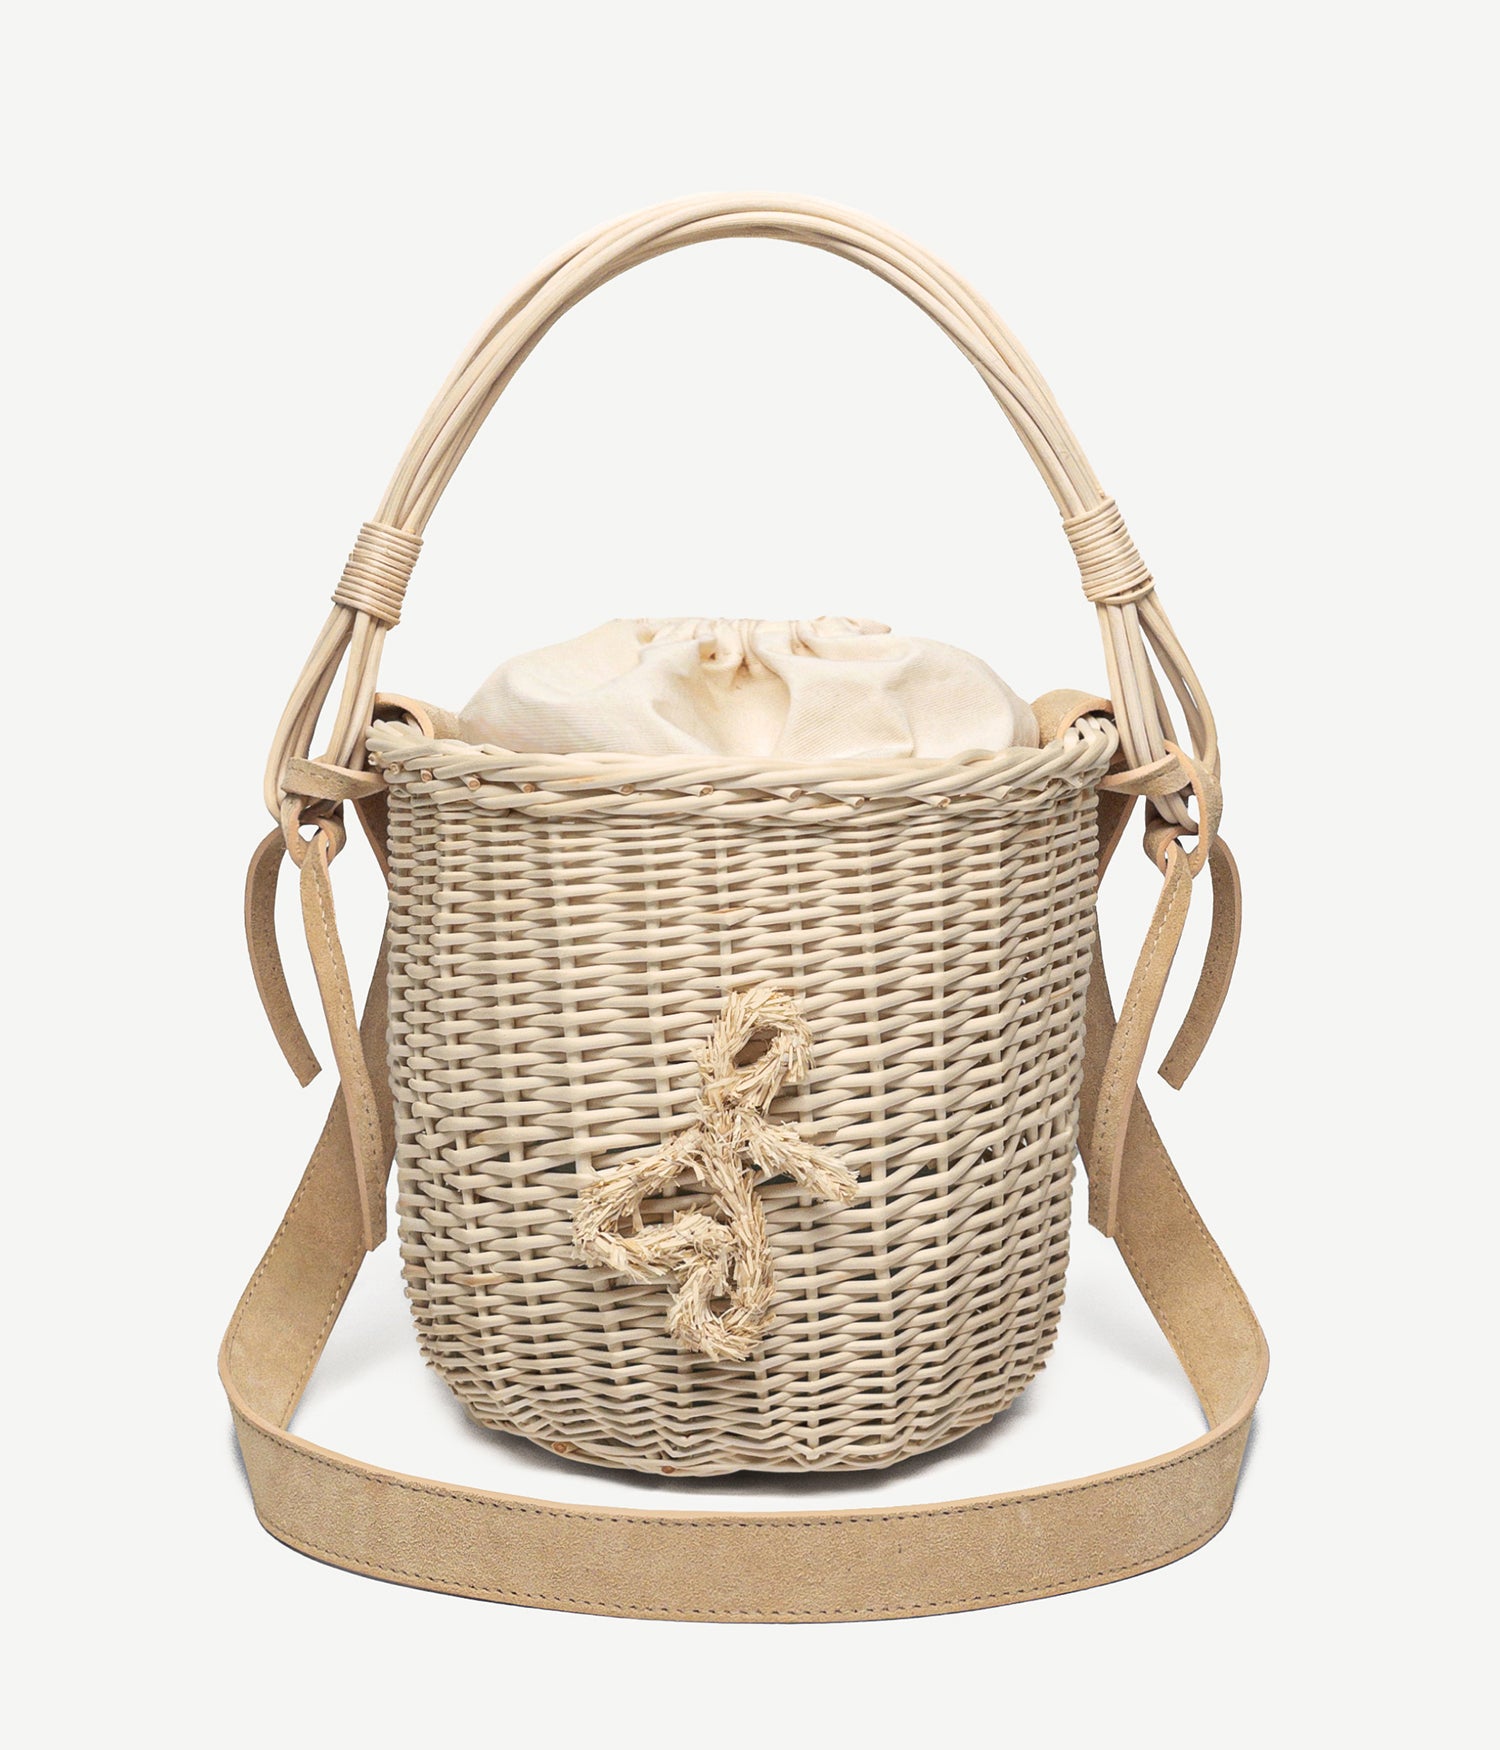 The Iza Basket Bag